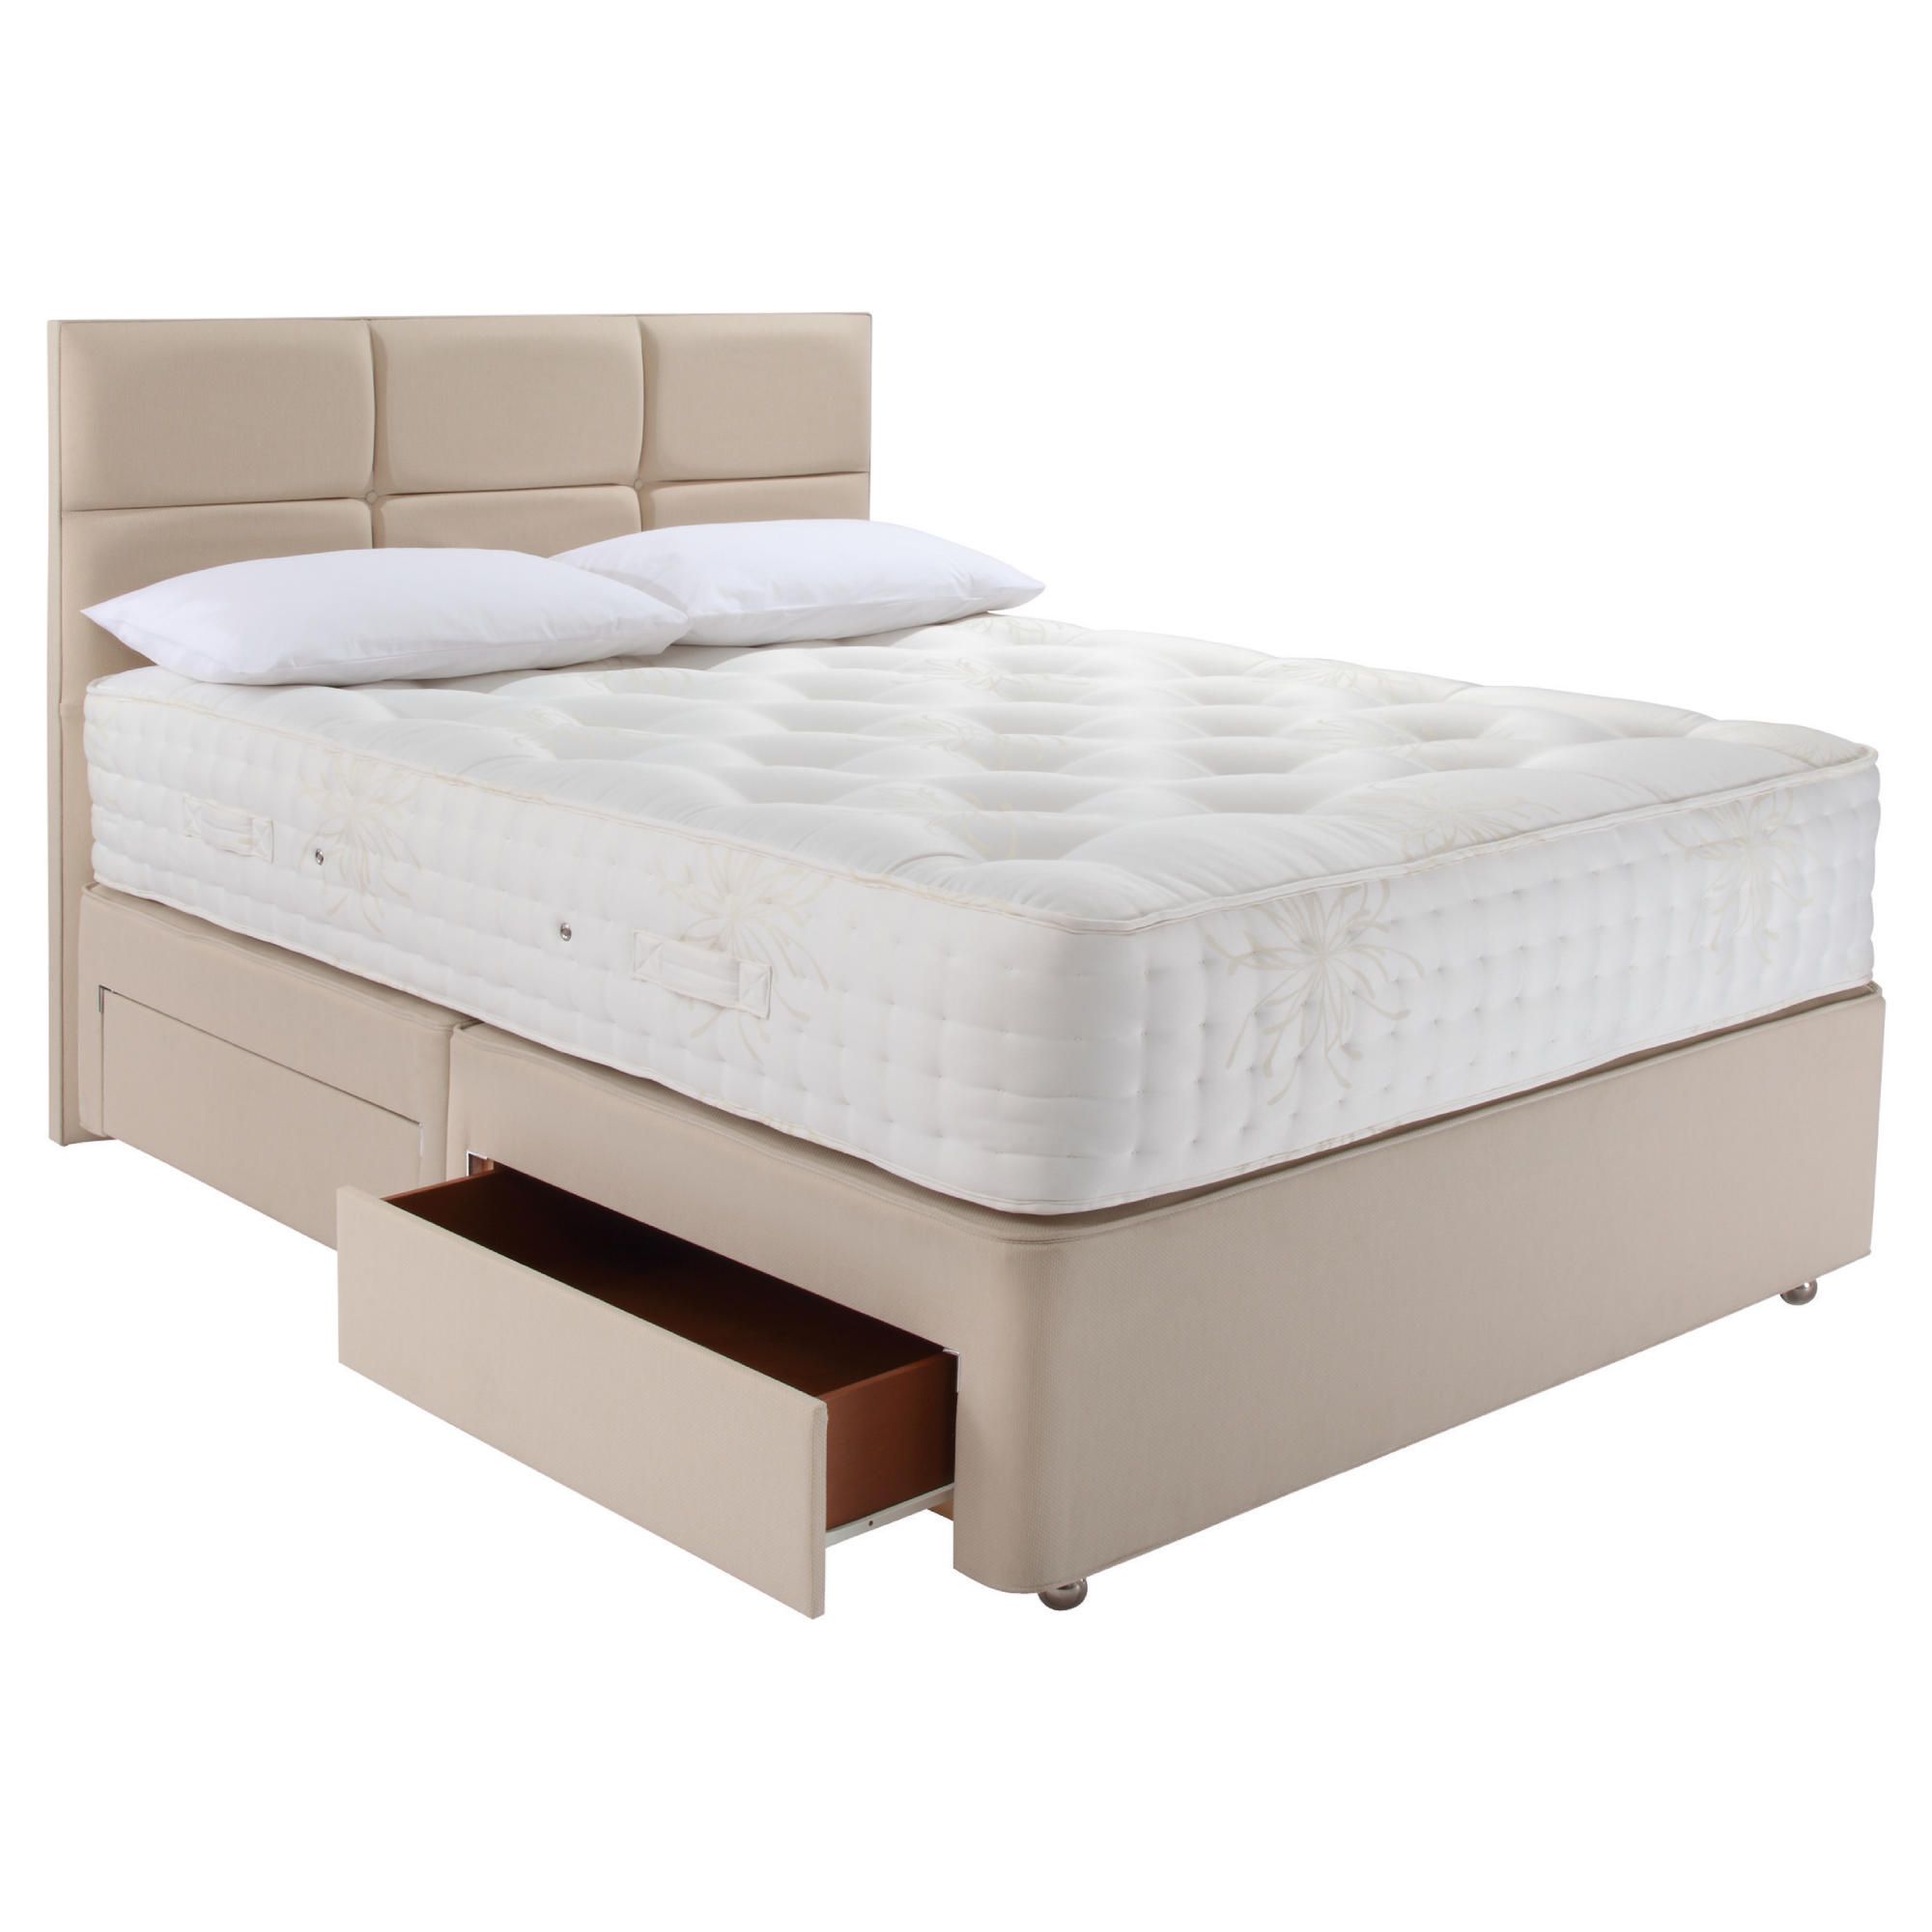 Relyon Luxury 1800 4 Drawer Divan Bed Superking at Tesco Direct